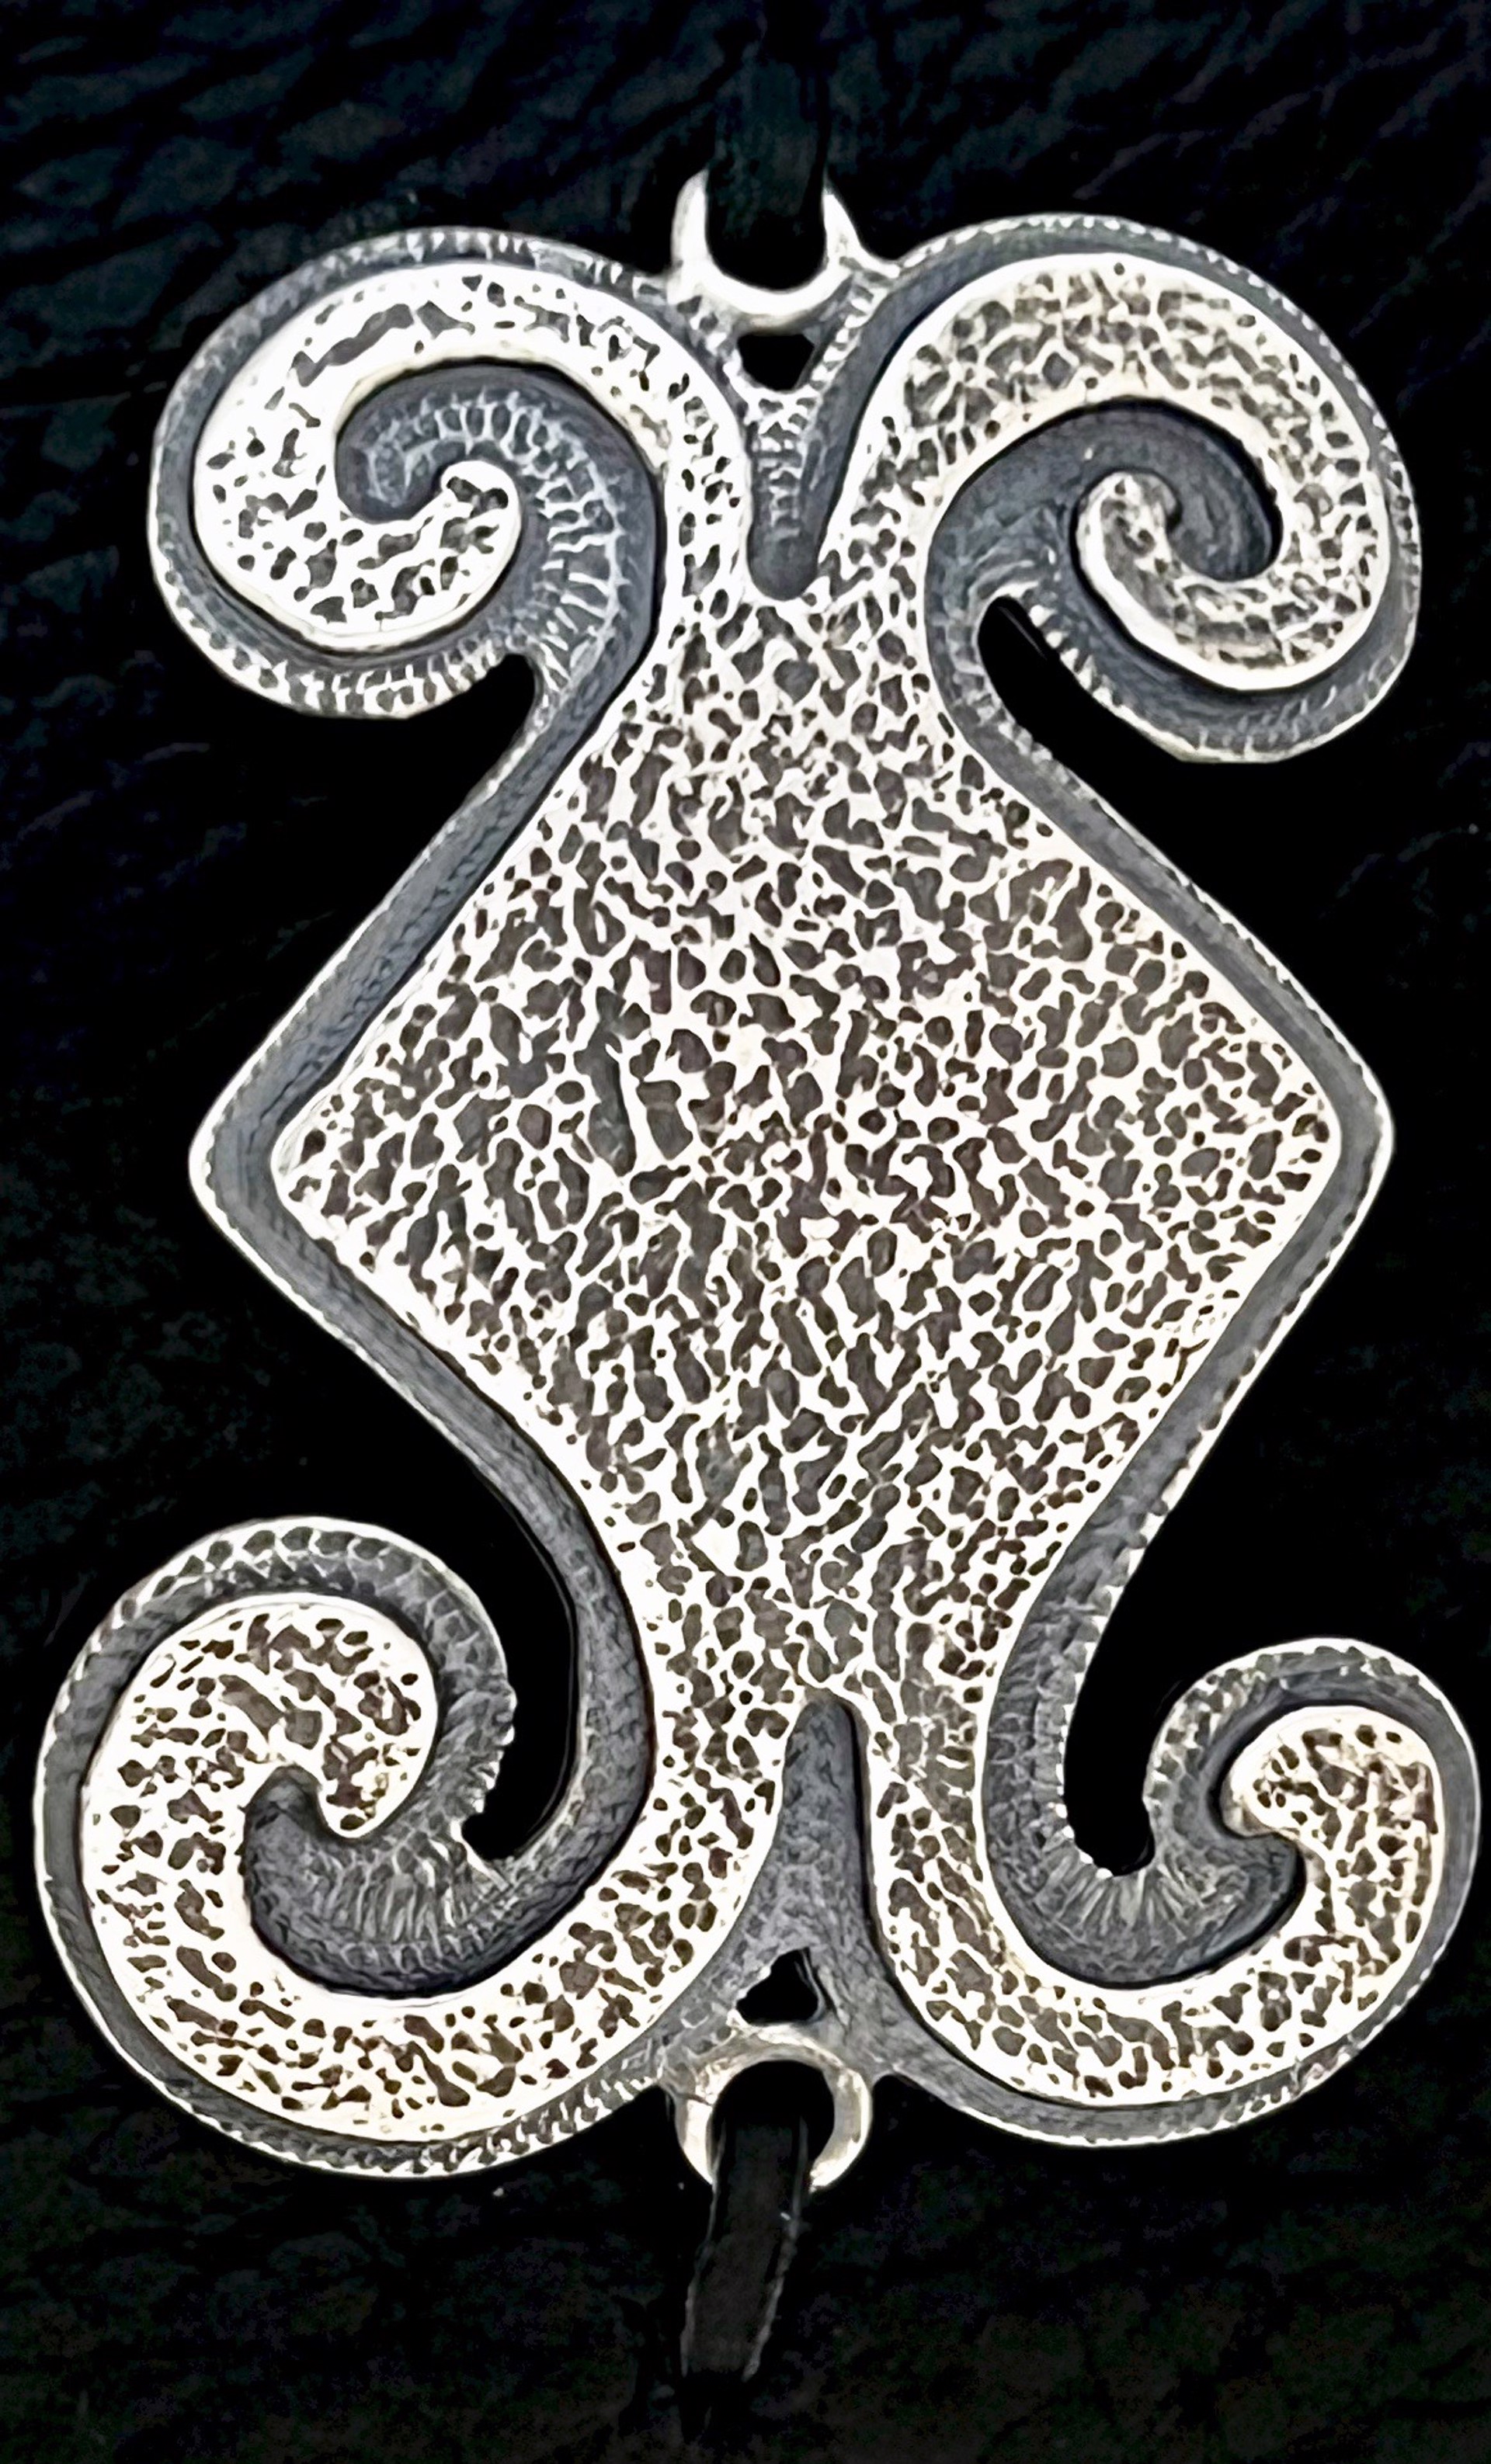 Hydra Contemporary pendant by Melanie Yazzie